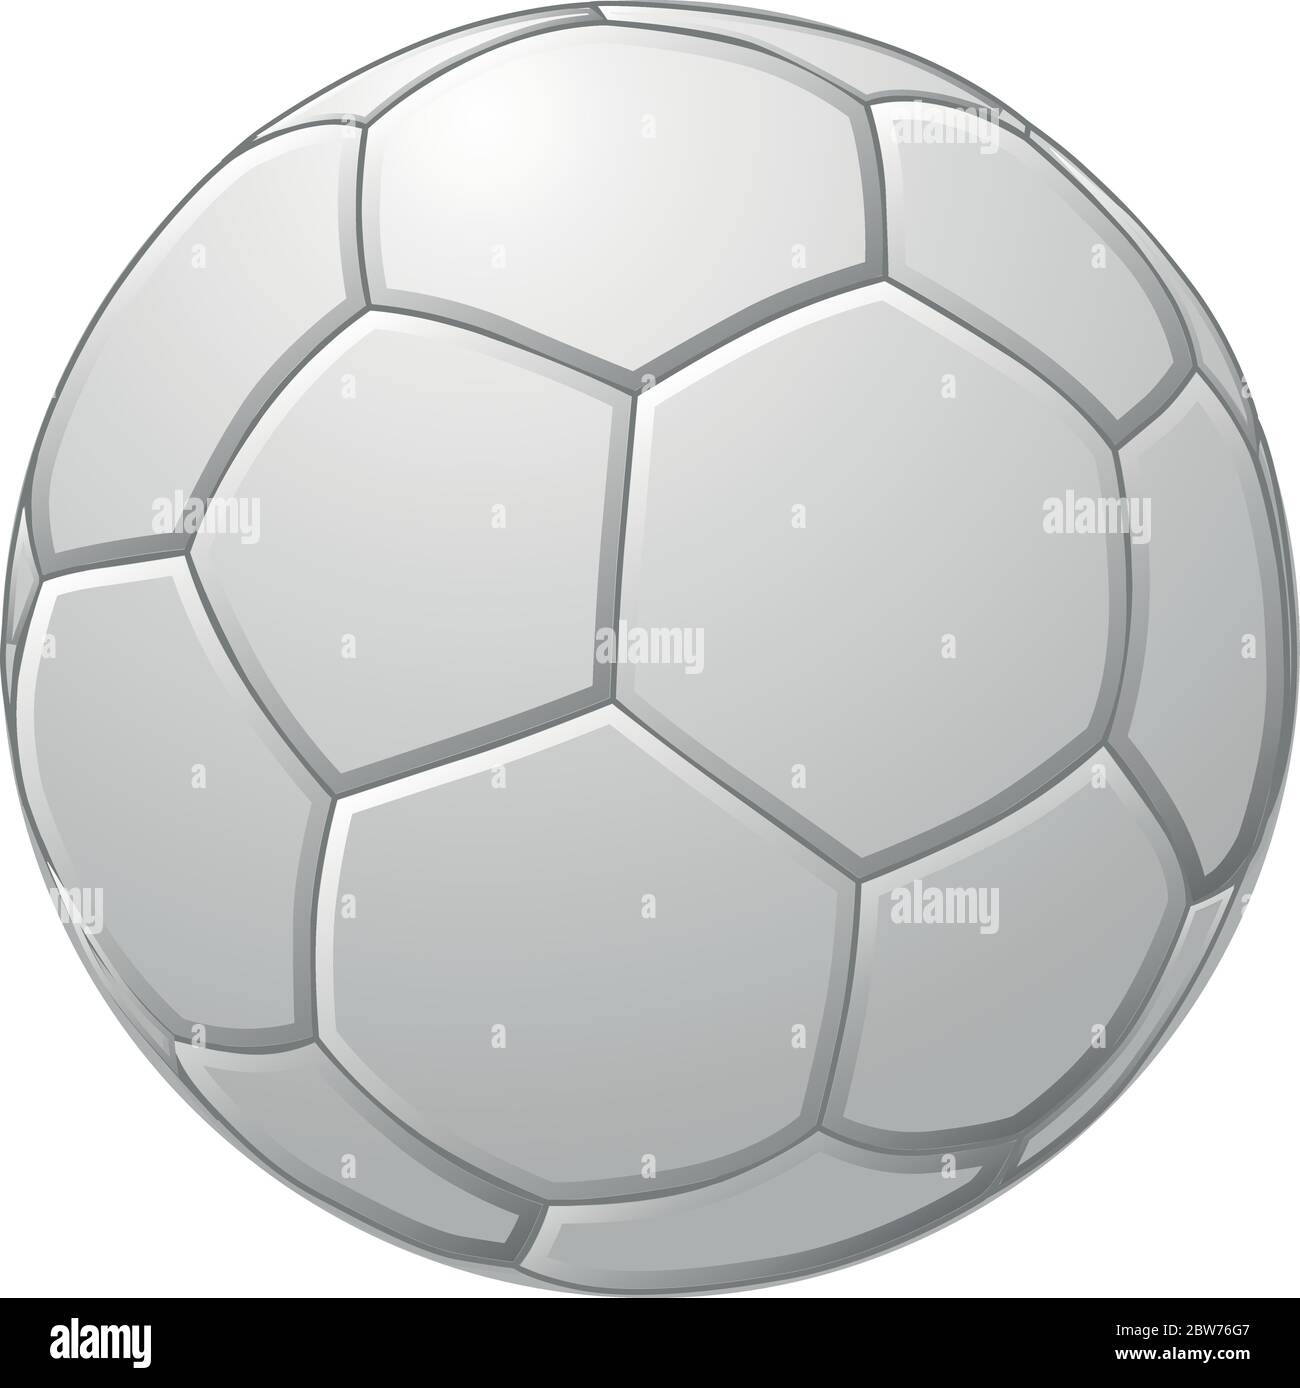 Abstract Soccer Half Volley Stock Vector - Illustration of design